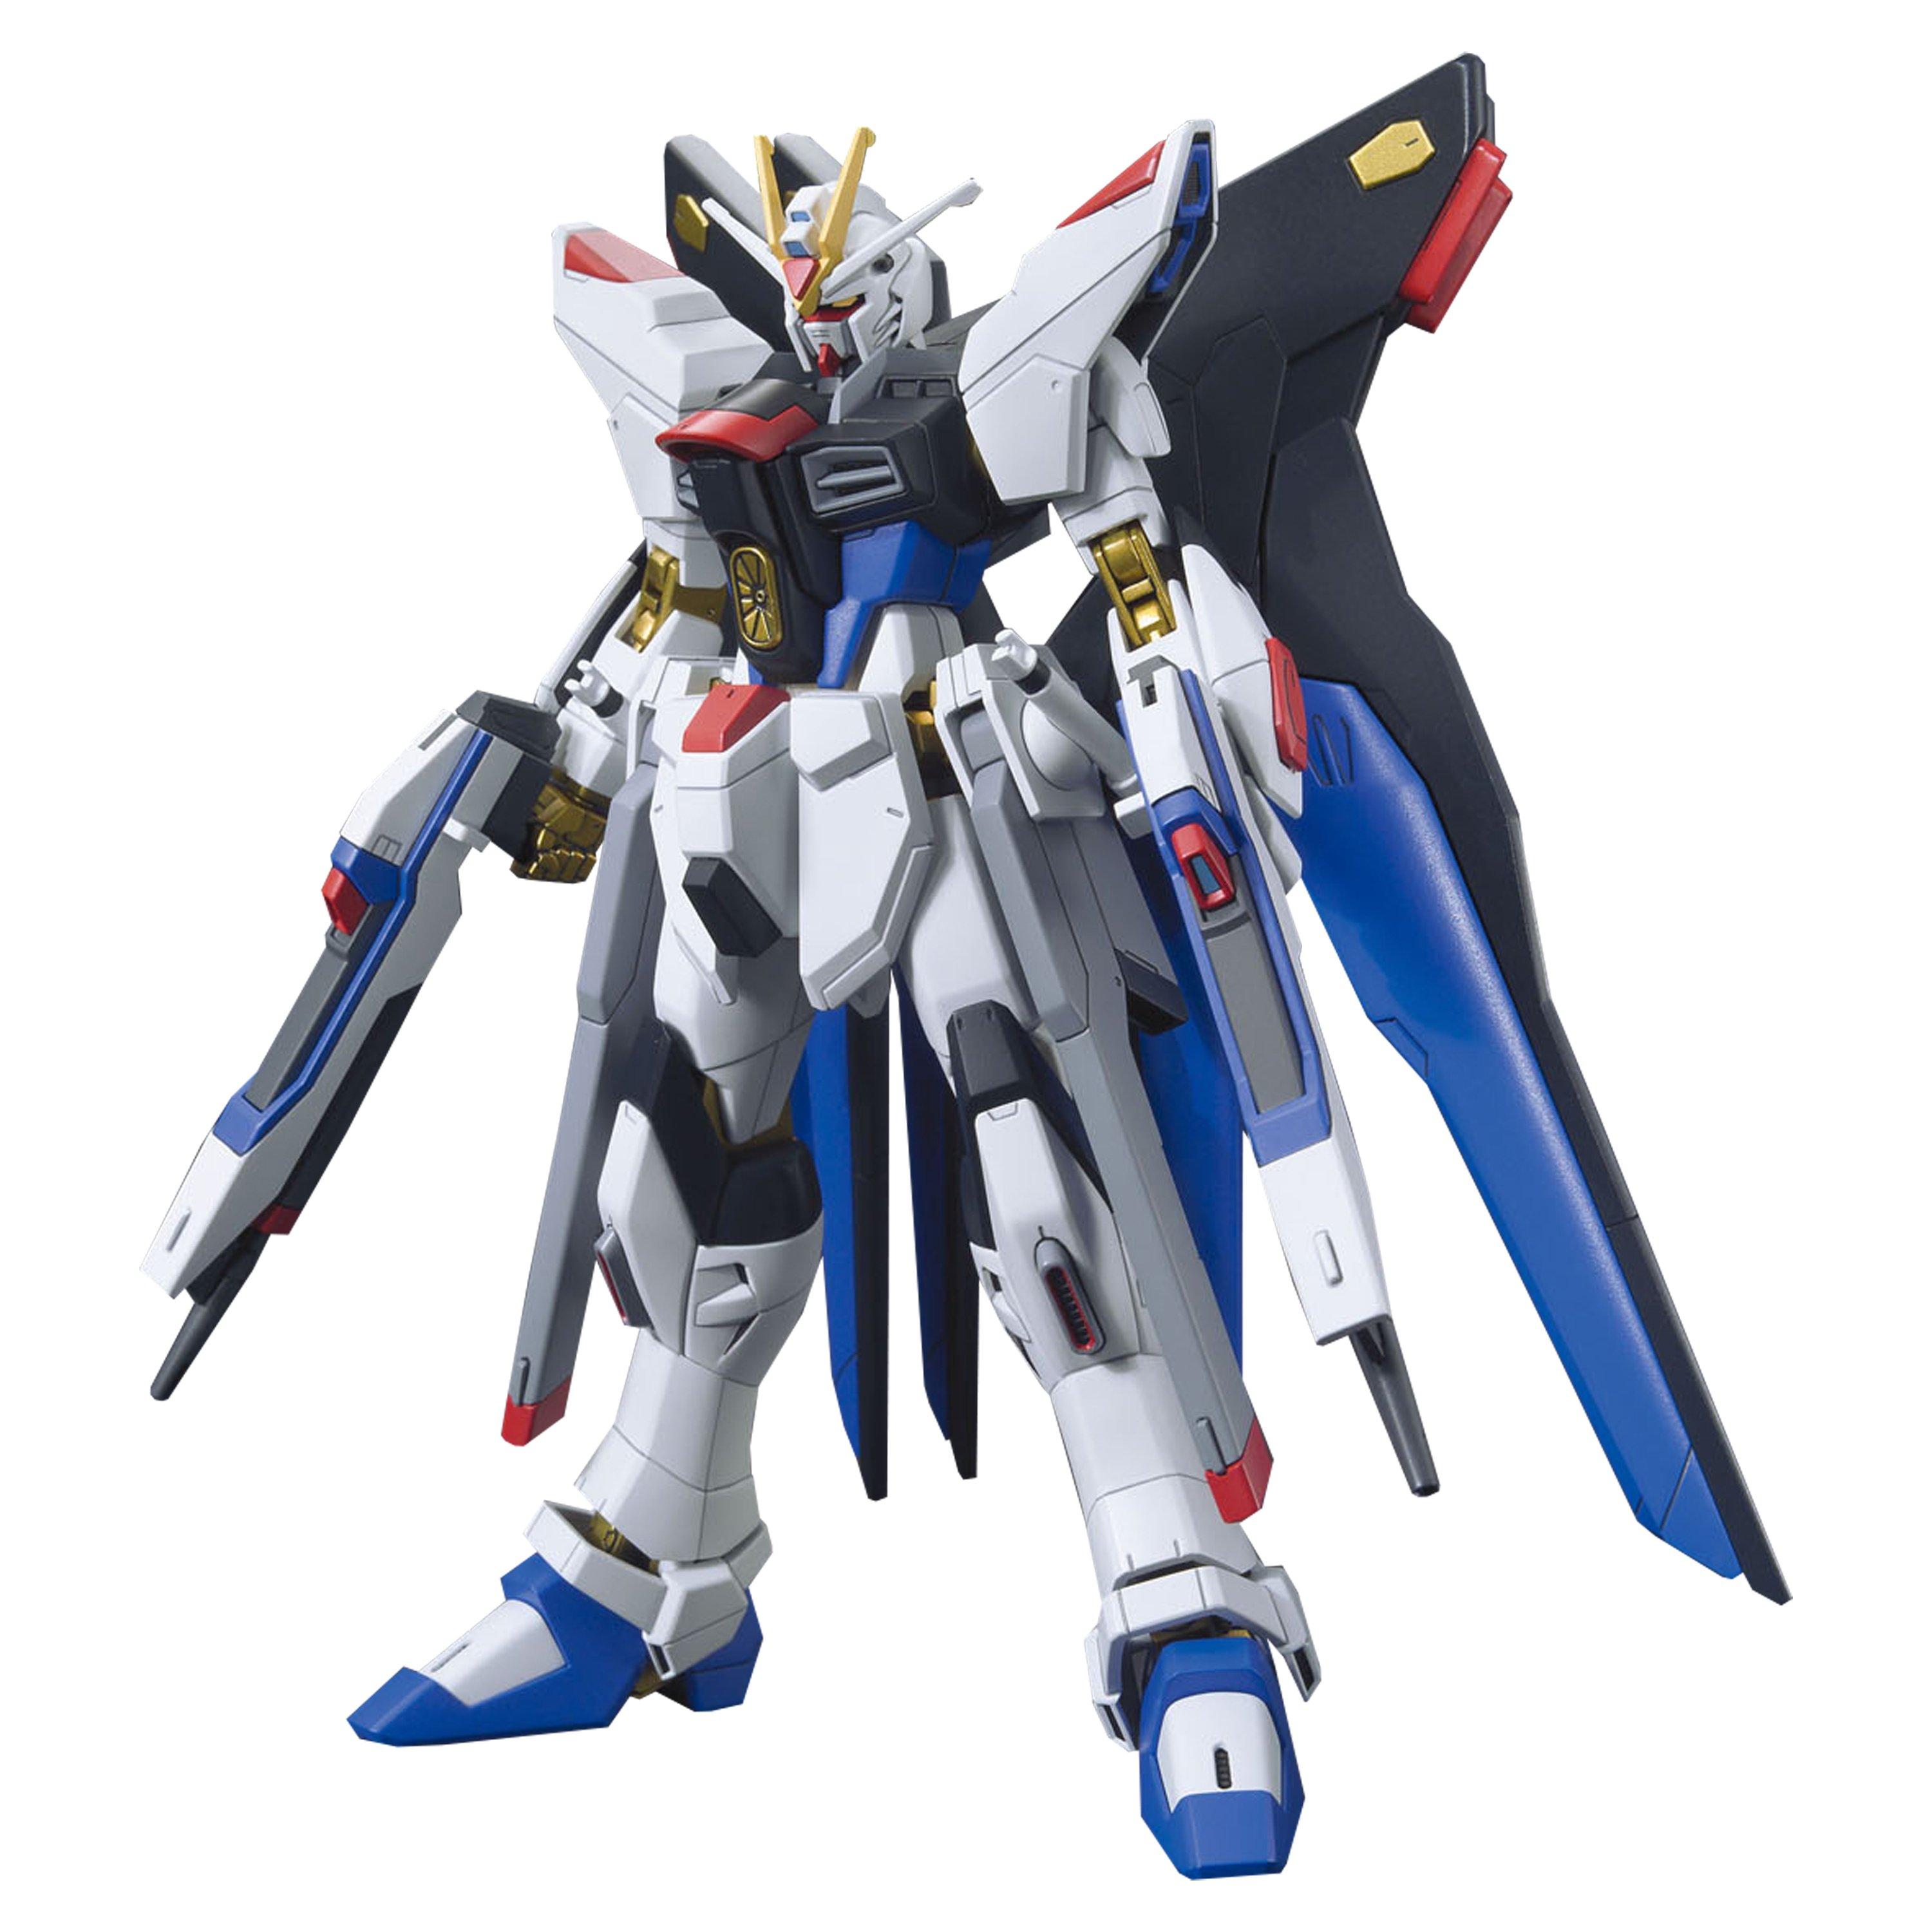 1w Delv Bandai HGBF 1/144 Strike Freedom Gundam Model Kit for sale online 